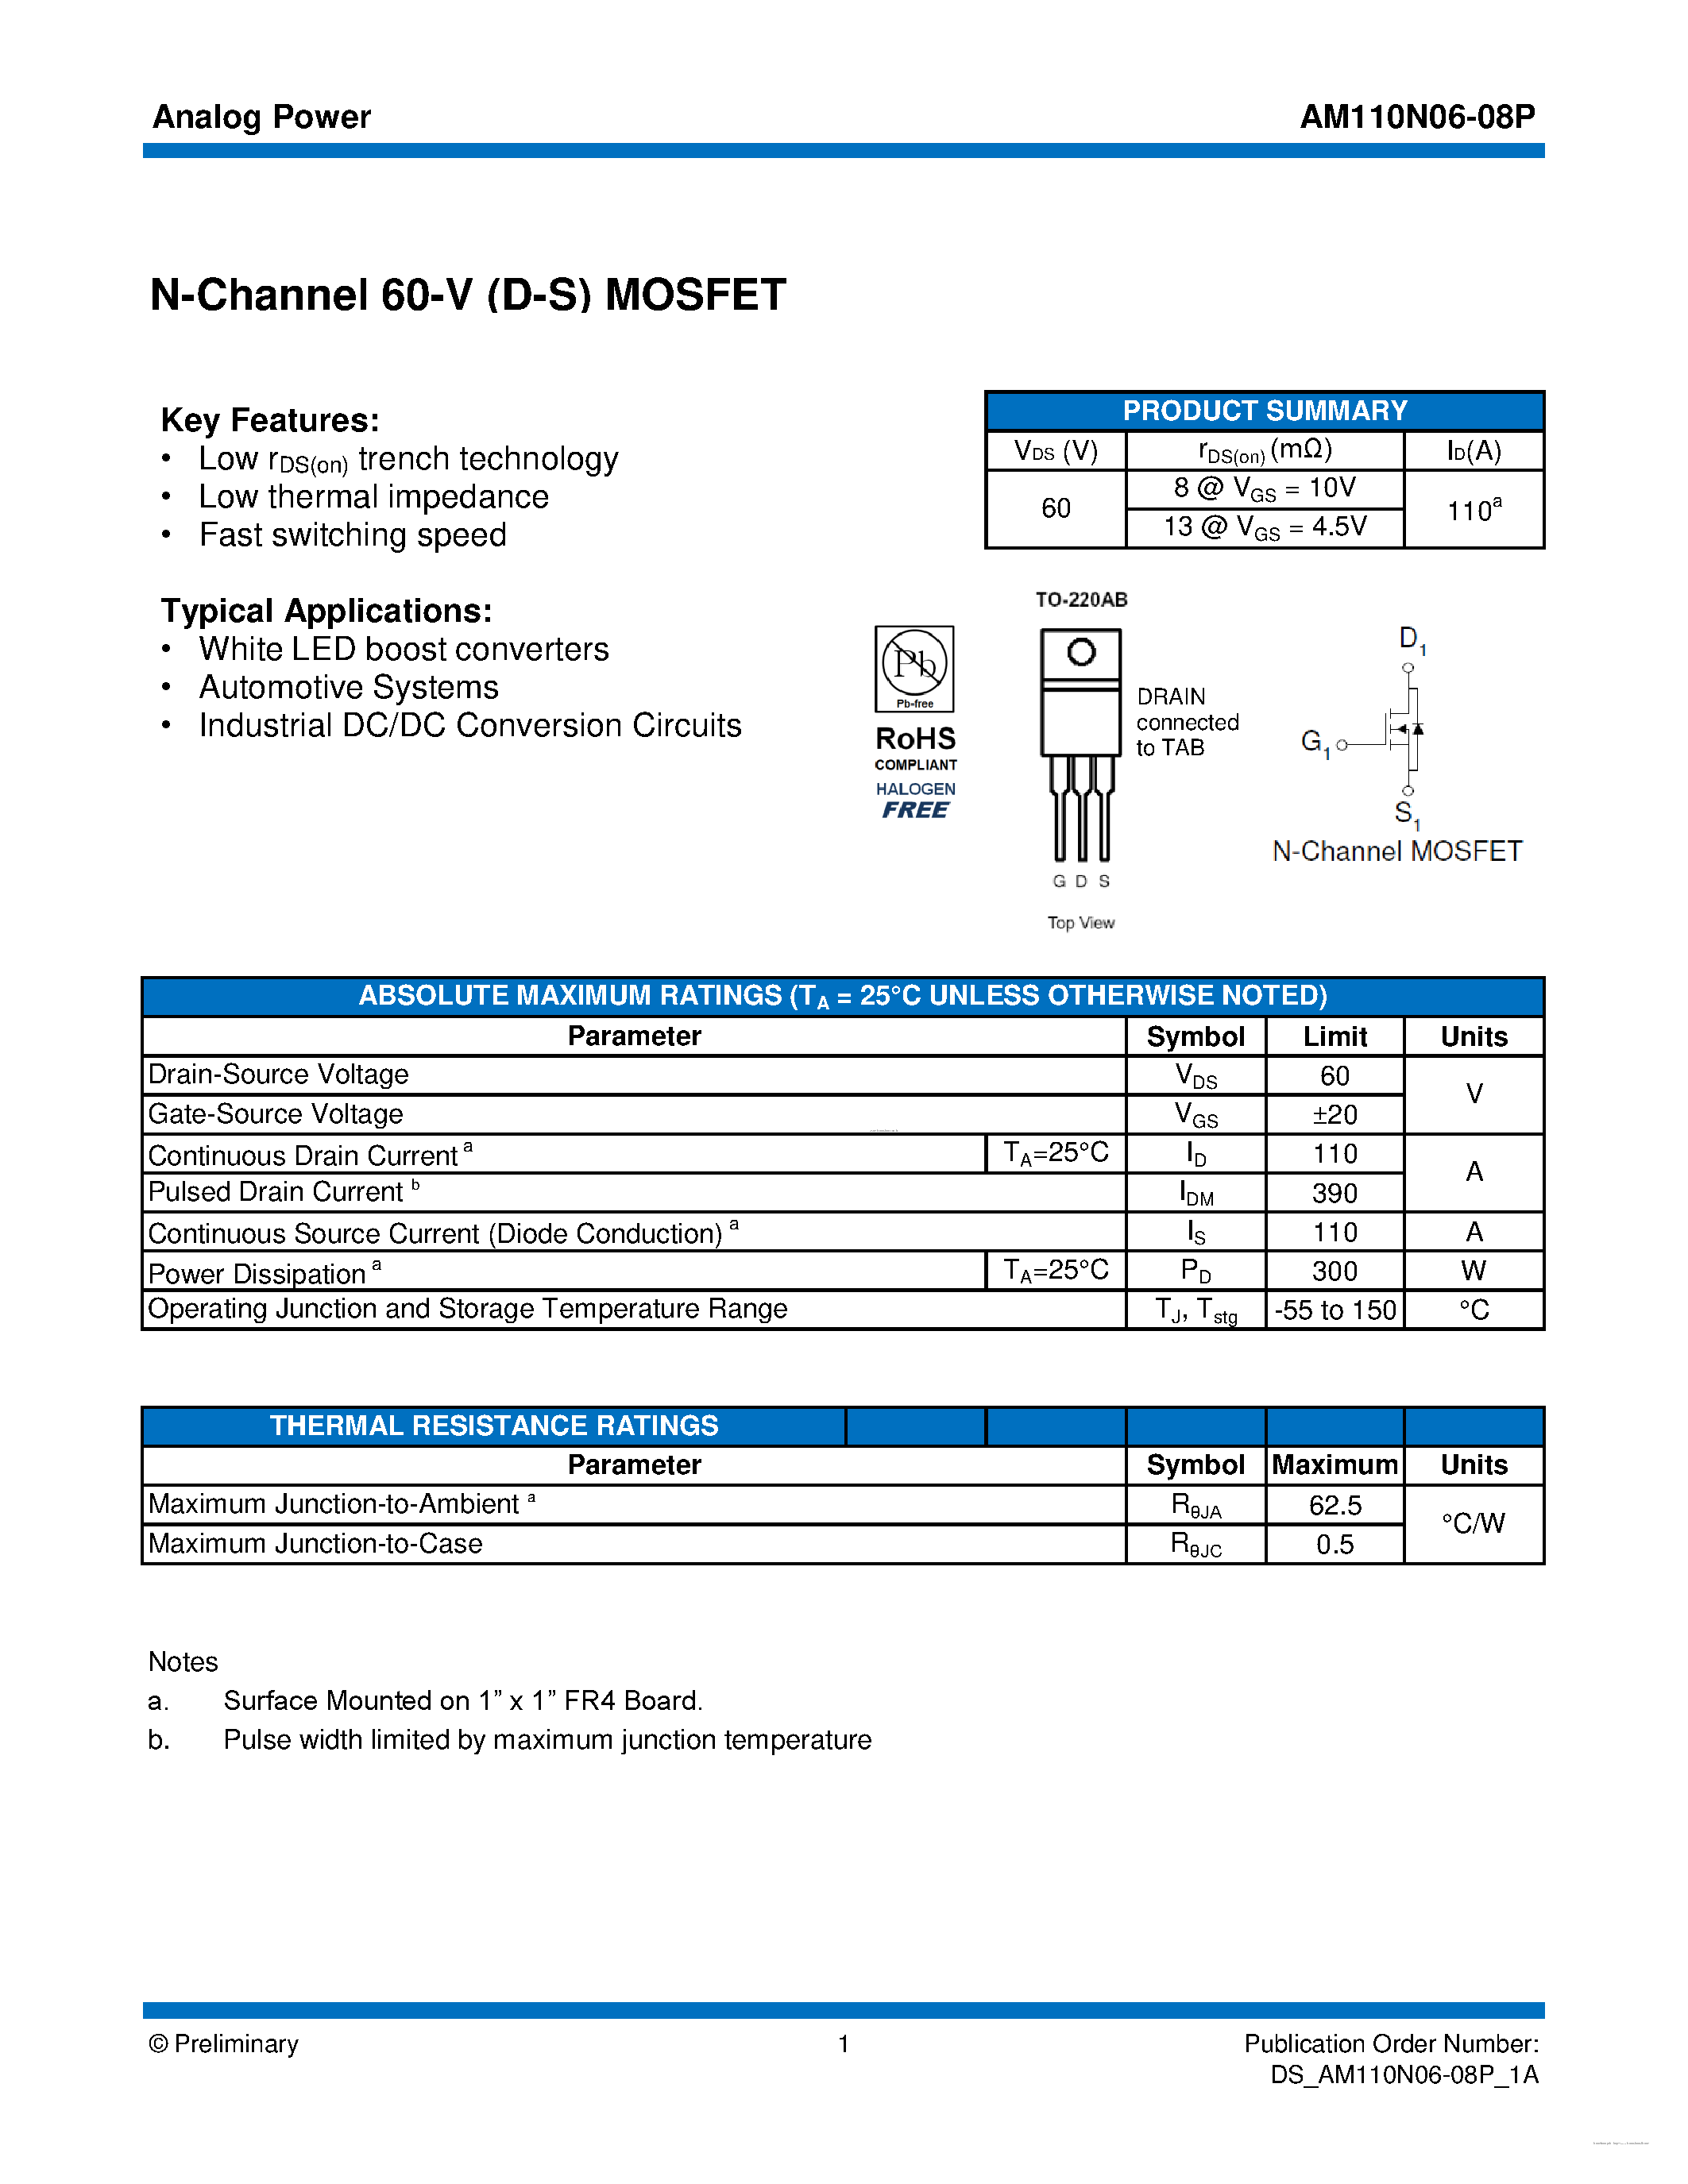 Даташит AM110N06-08P - N-Channel 60-V (D-S) MOSFET страница 1